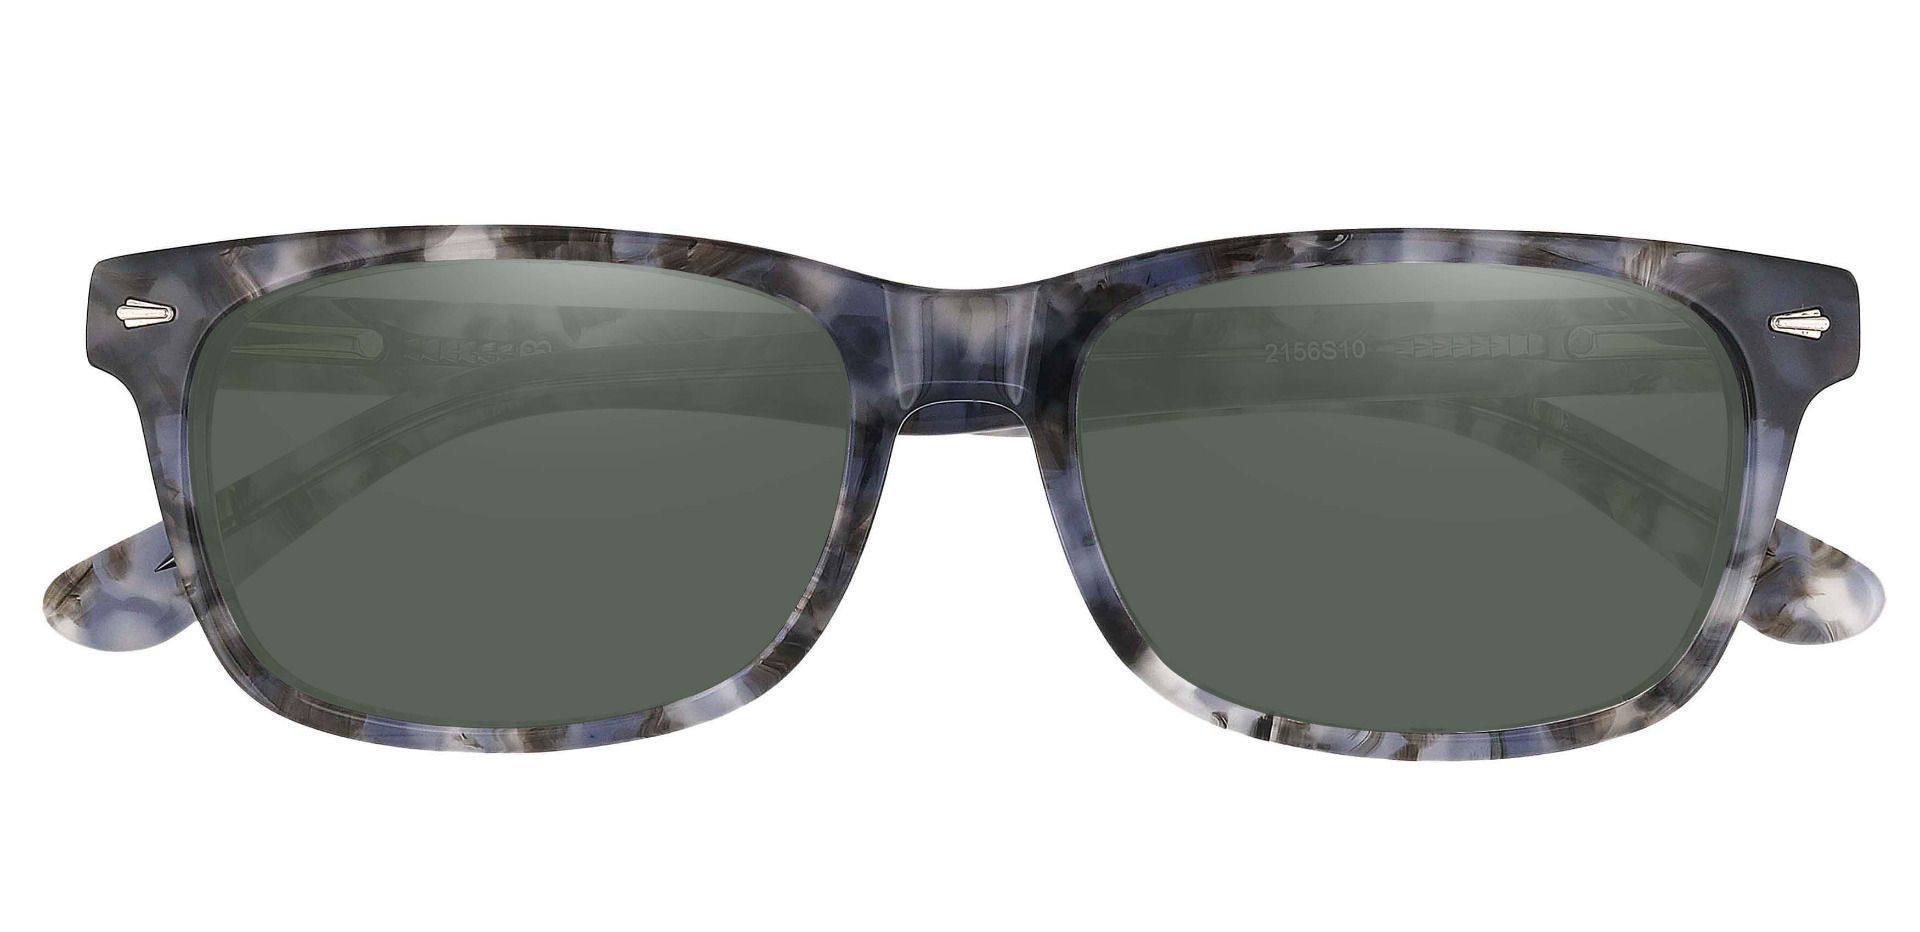 Hendrix Rectangle Prescription Sunglasses - Floral Frame With Green Lenses